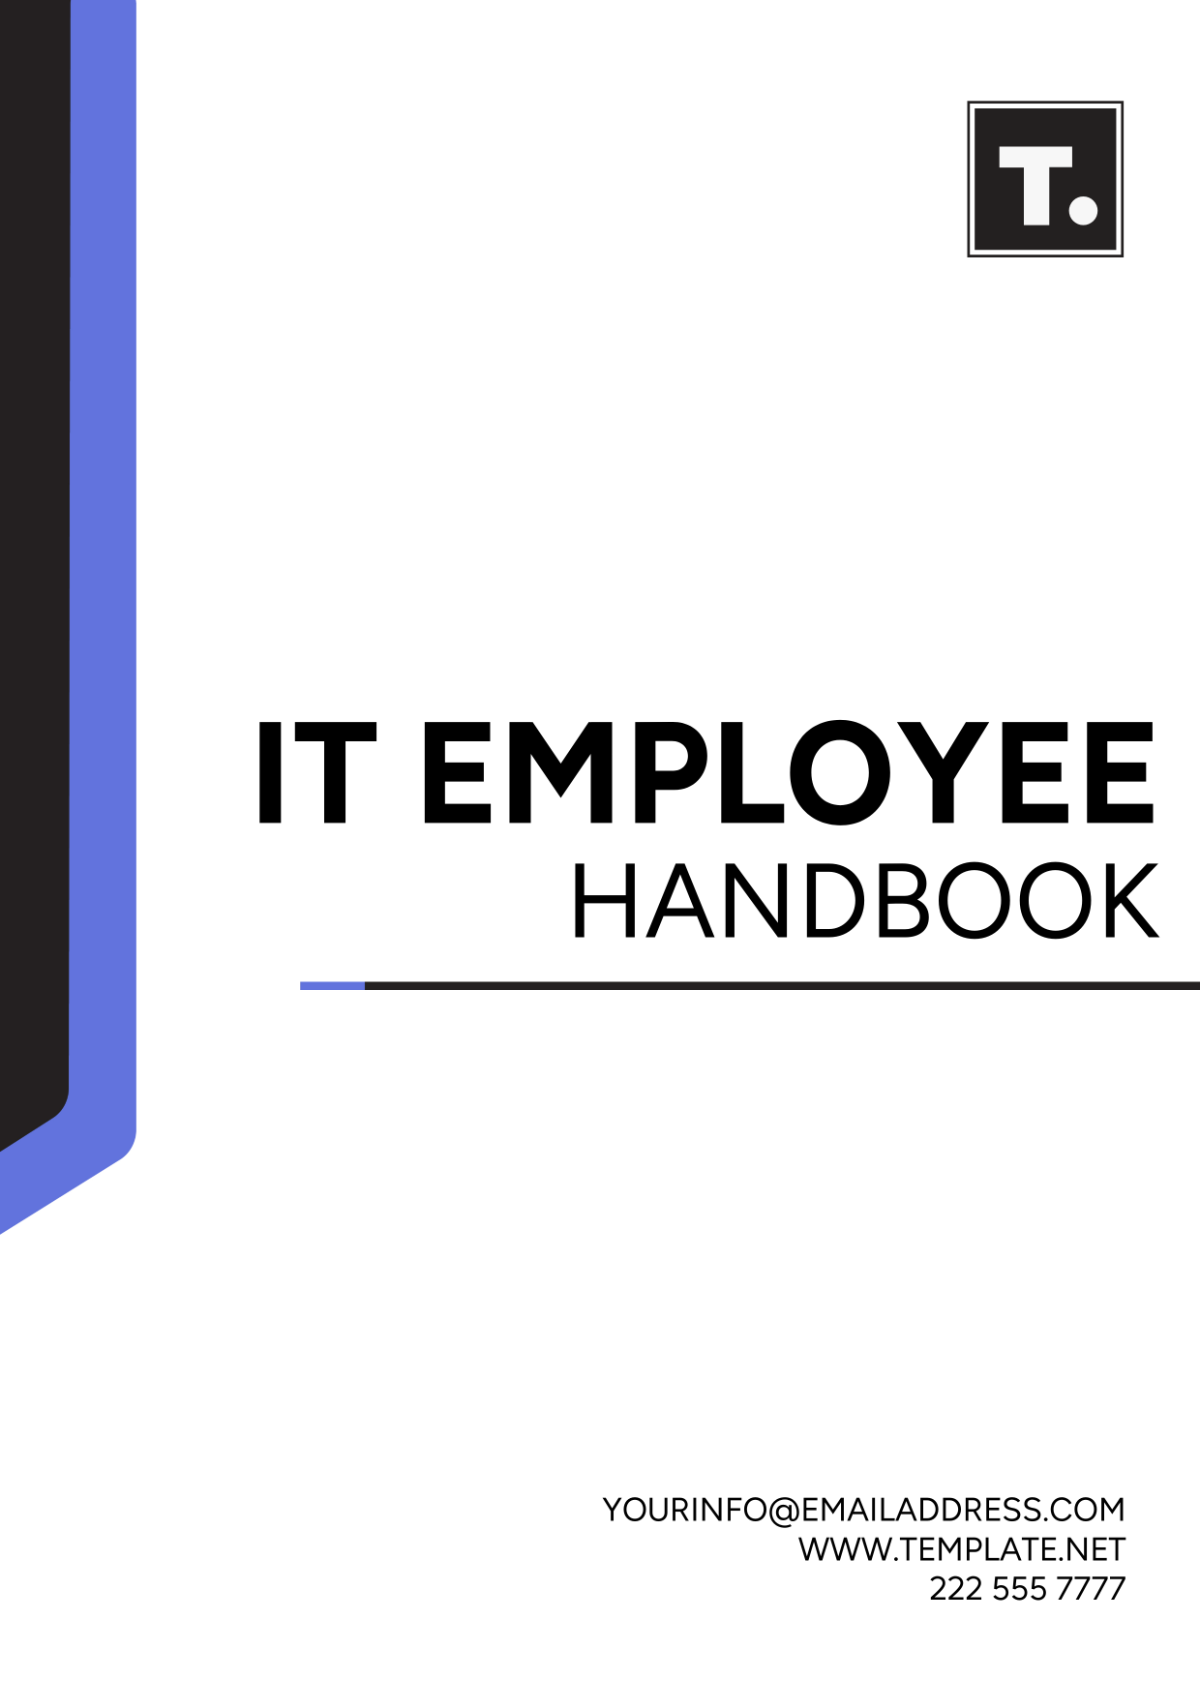 Free IT Employee Handbook Template